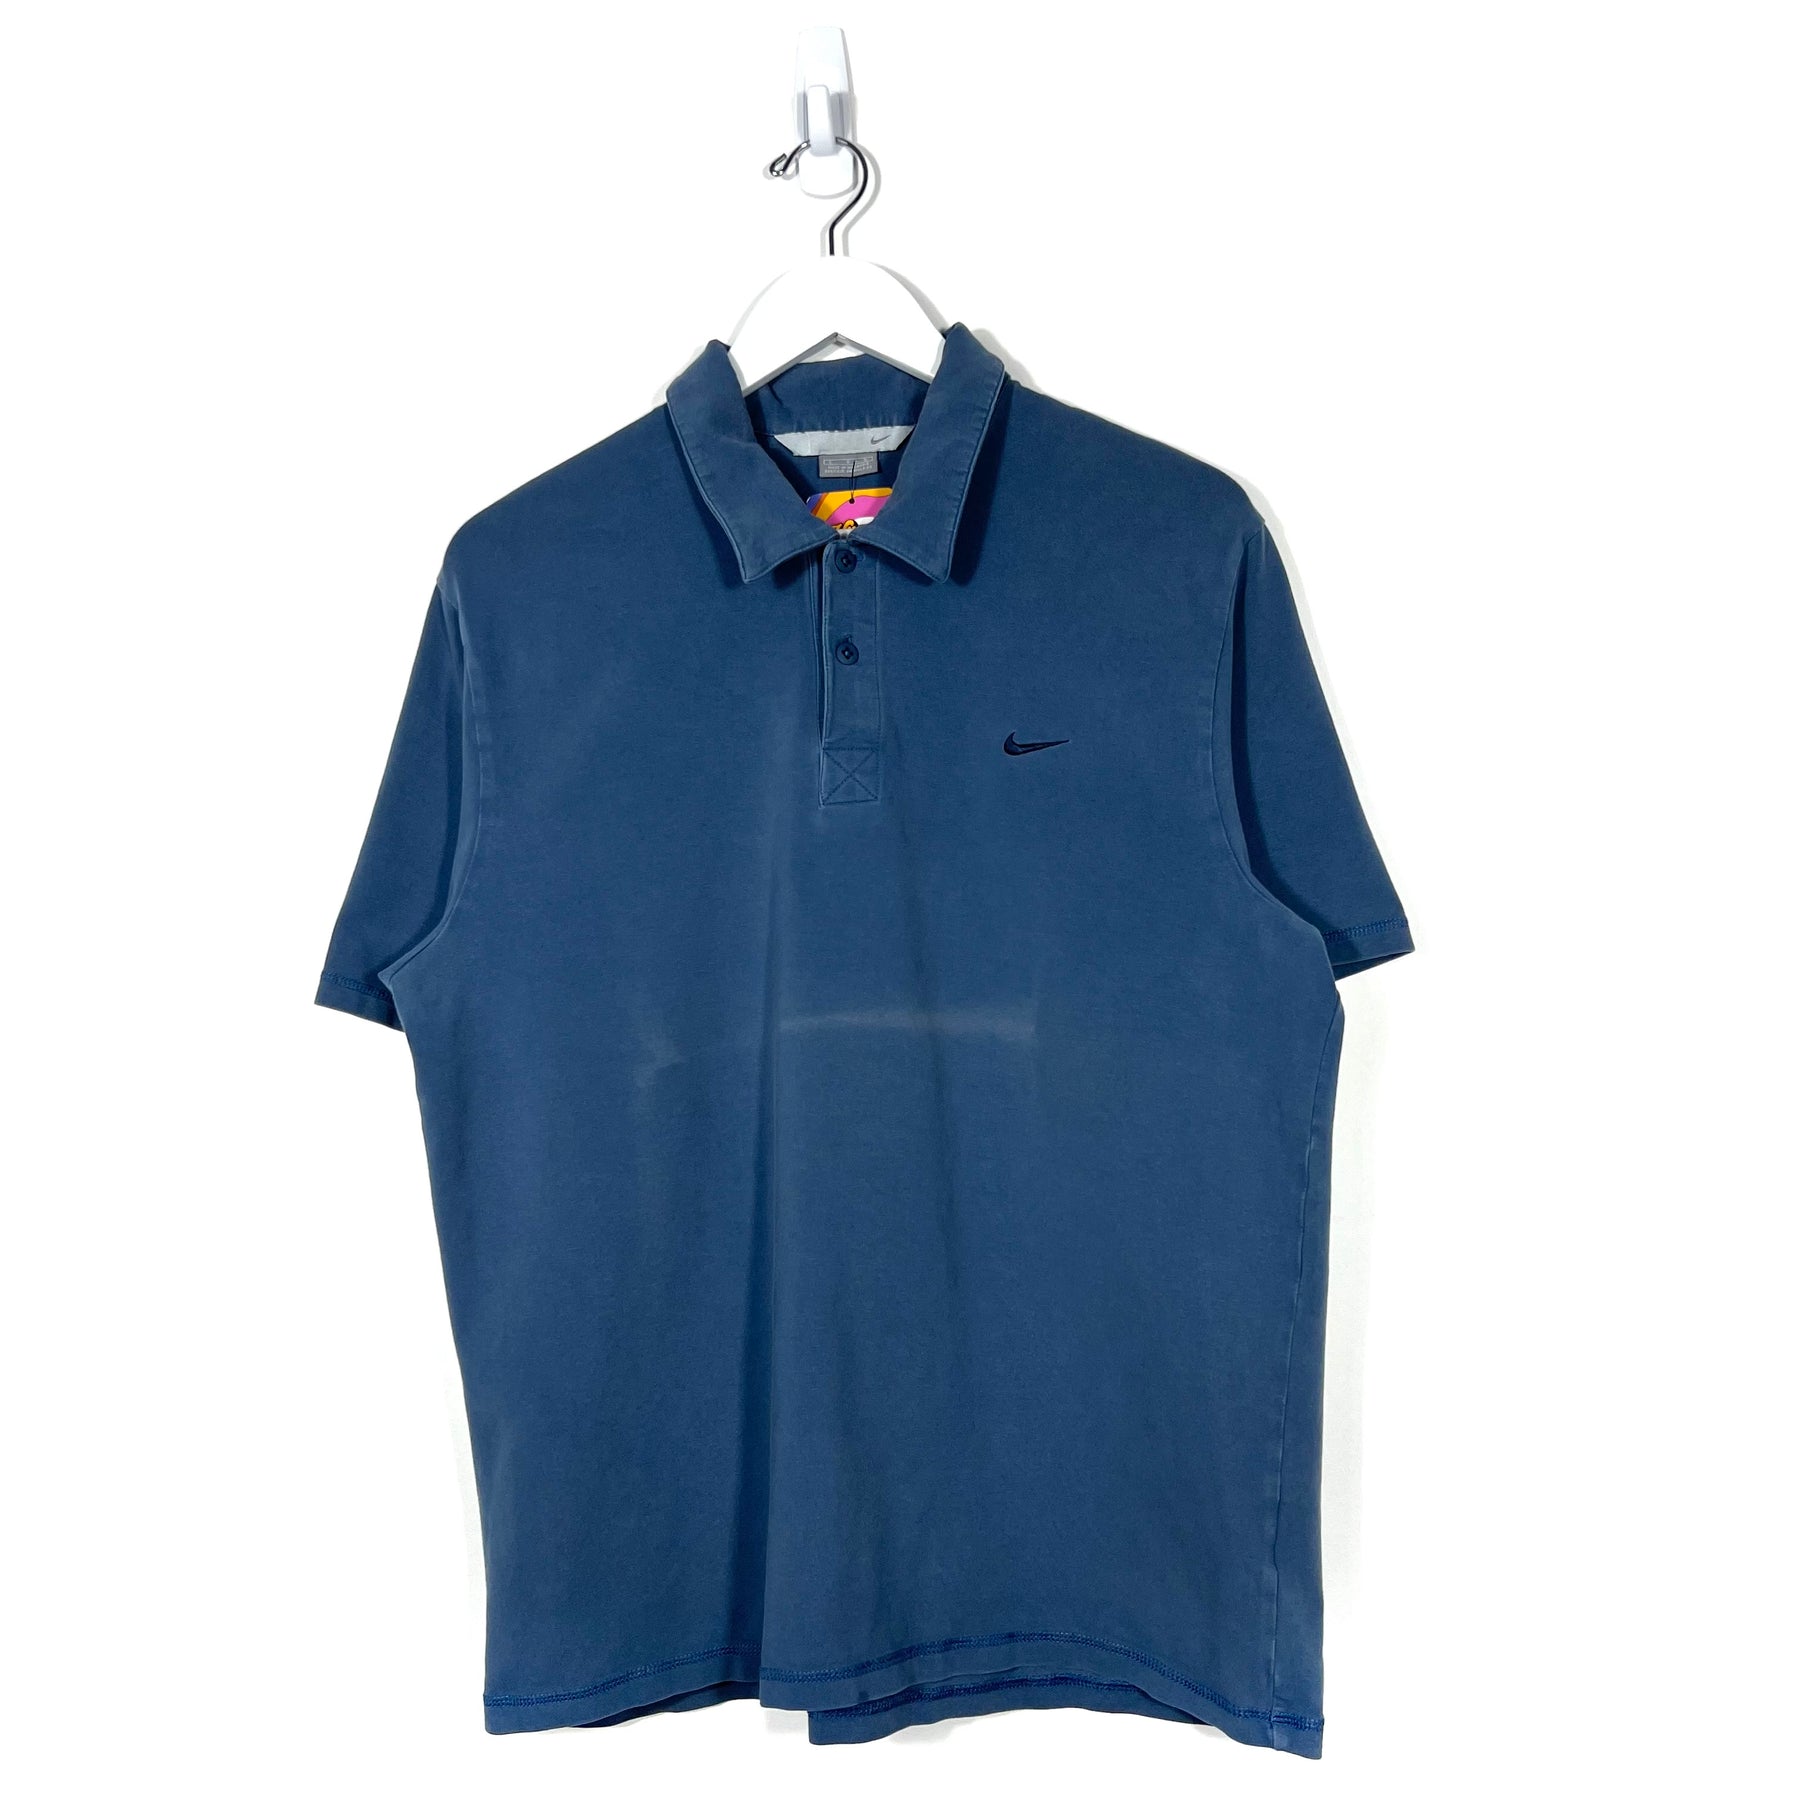 Vintage Nike Polo Shirt - Men's Medium